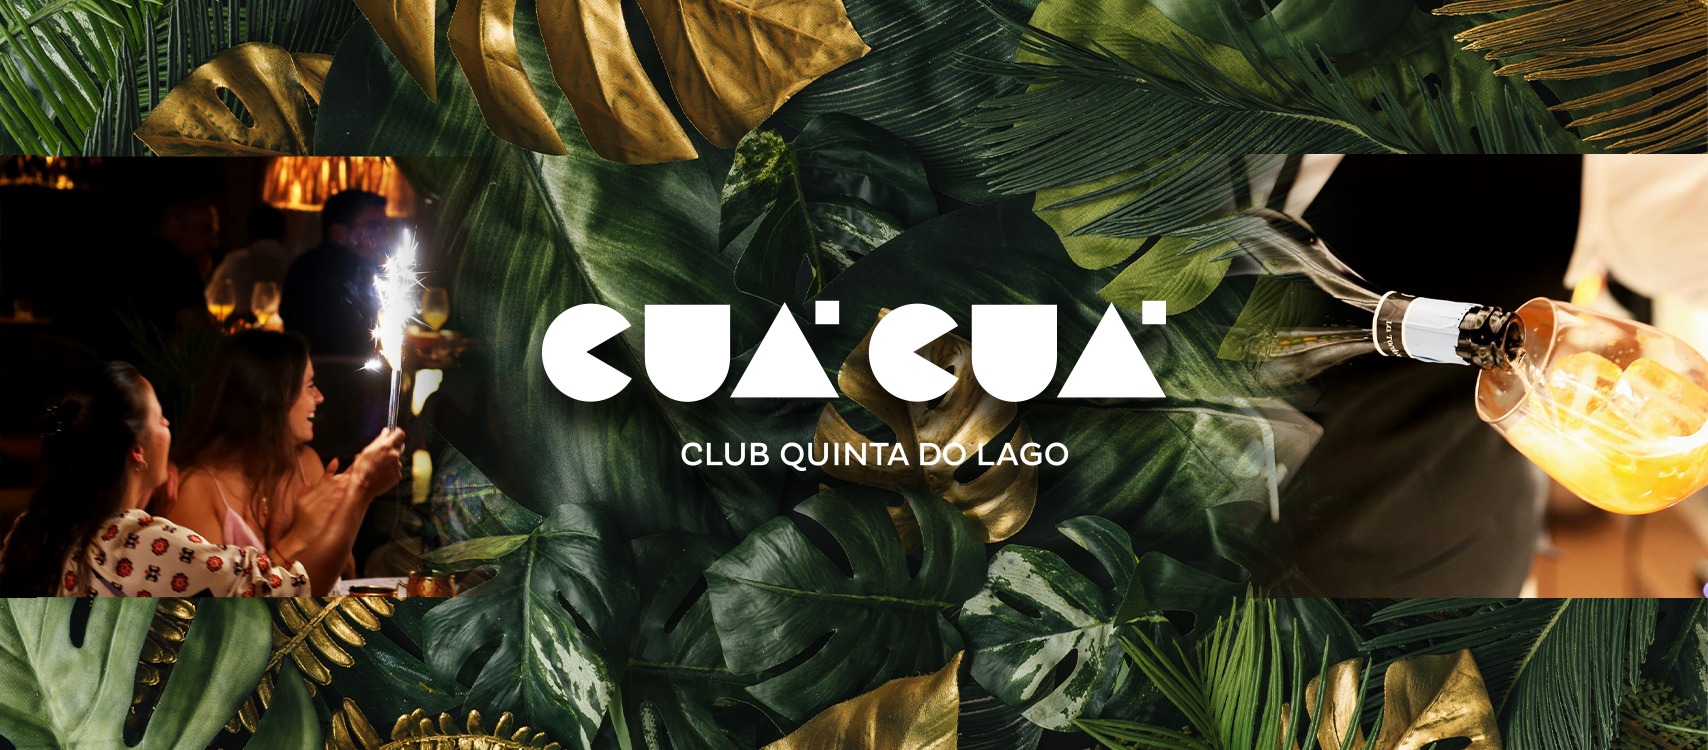 ESC Online sponsors concerts at Cuá Cuá Club in Quinta do Lago